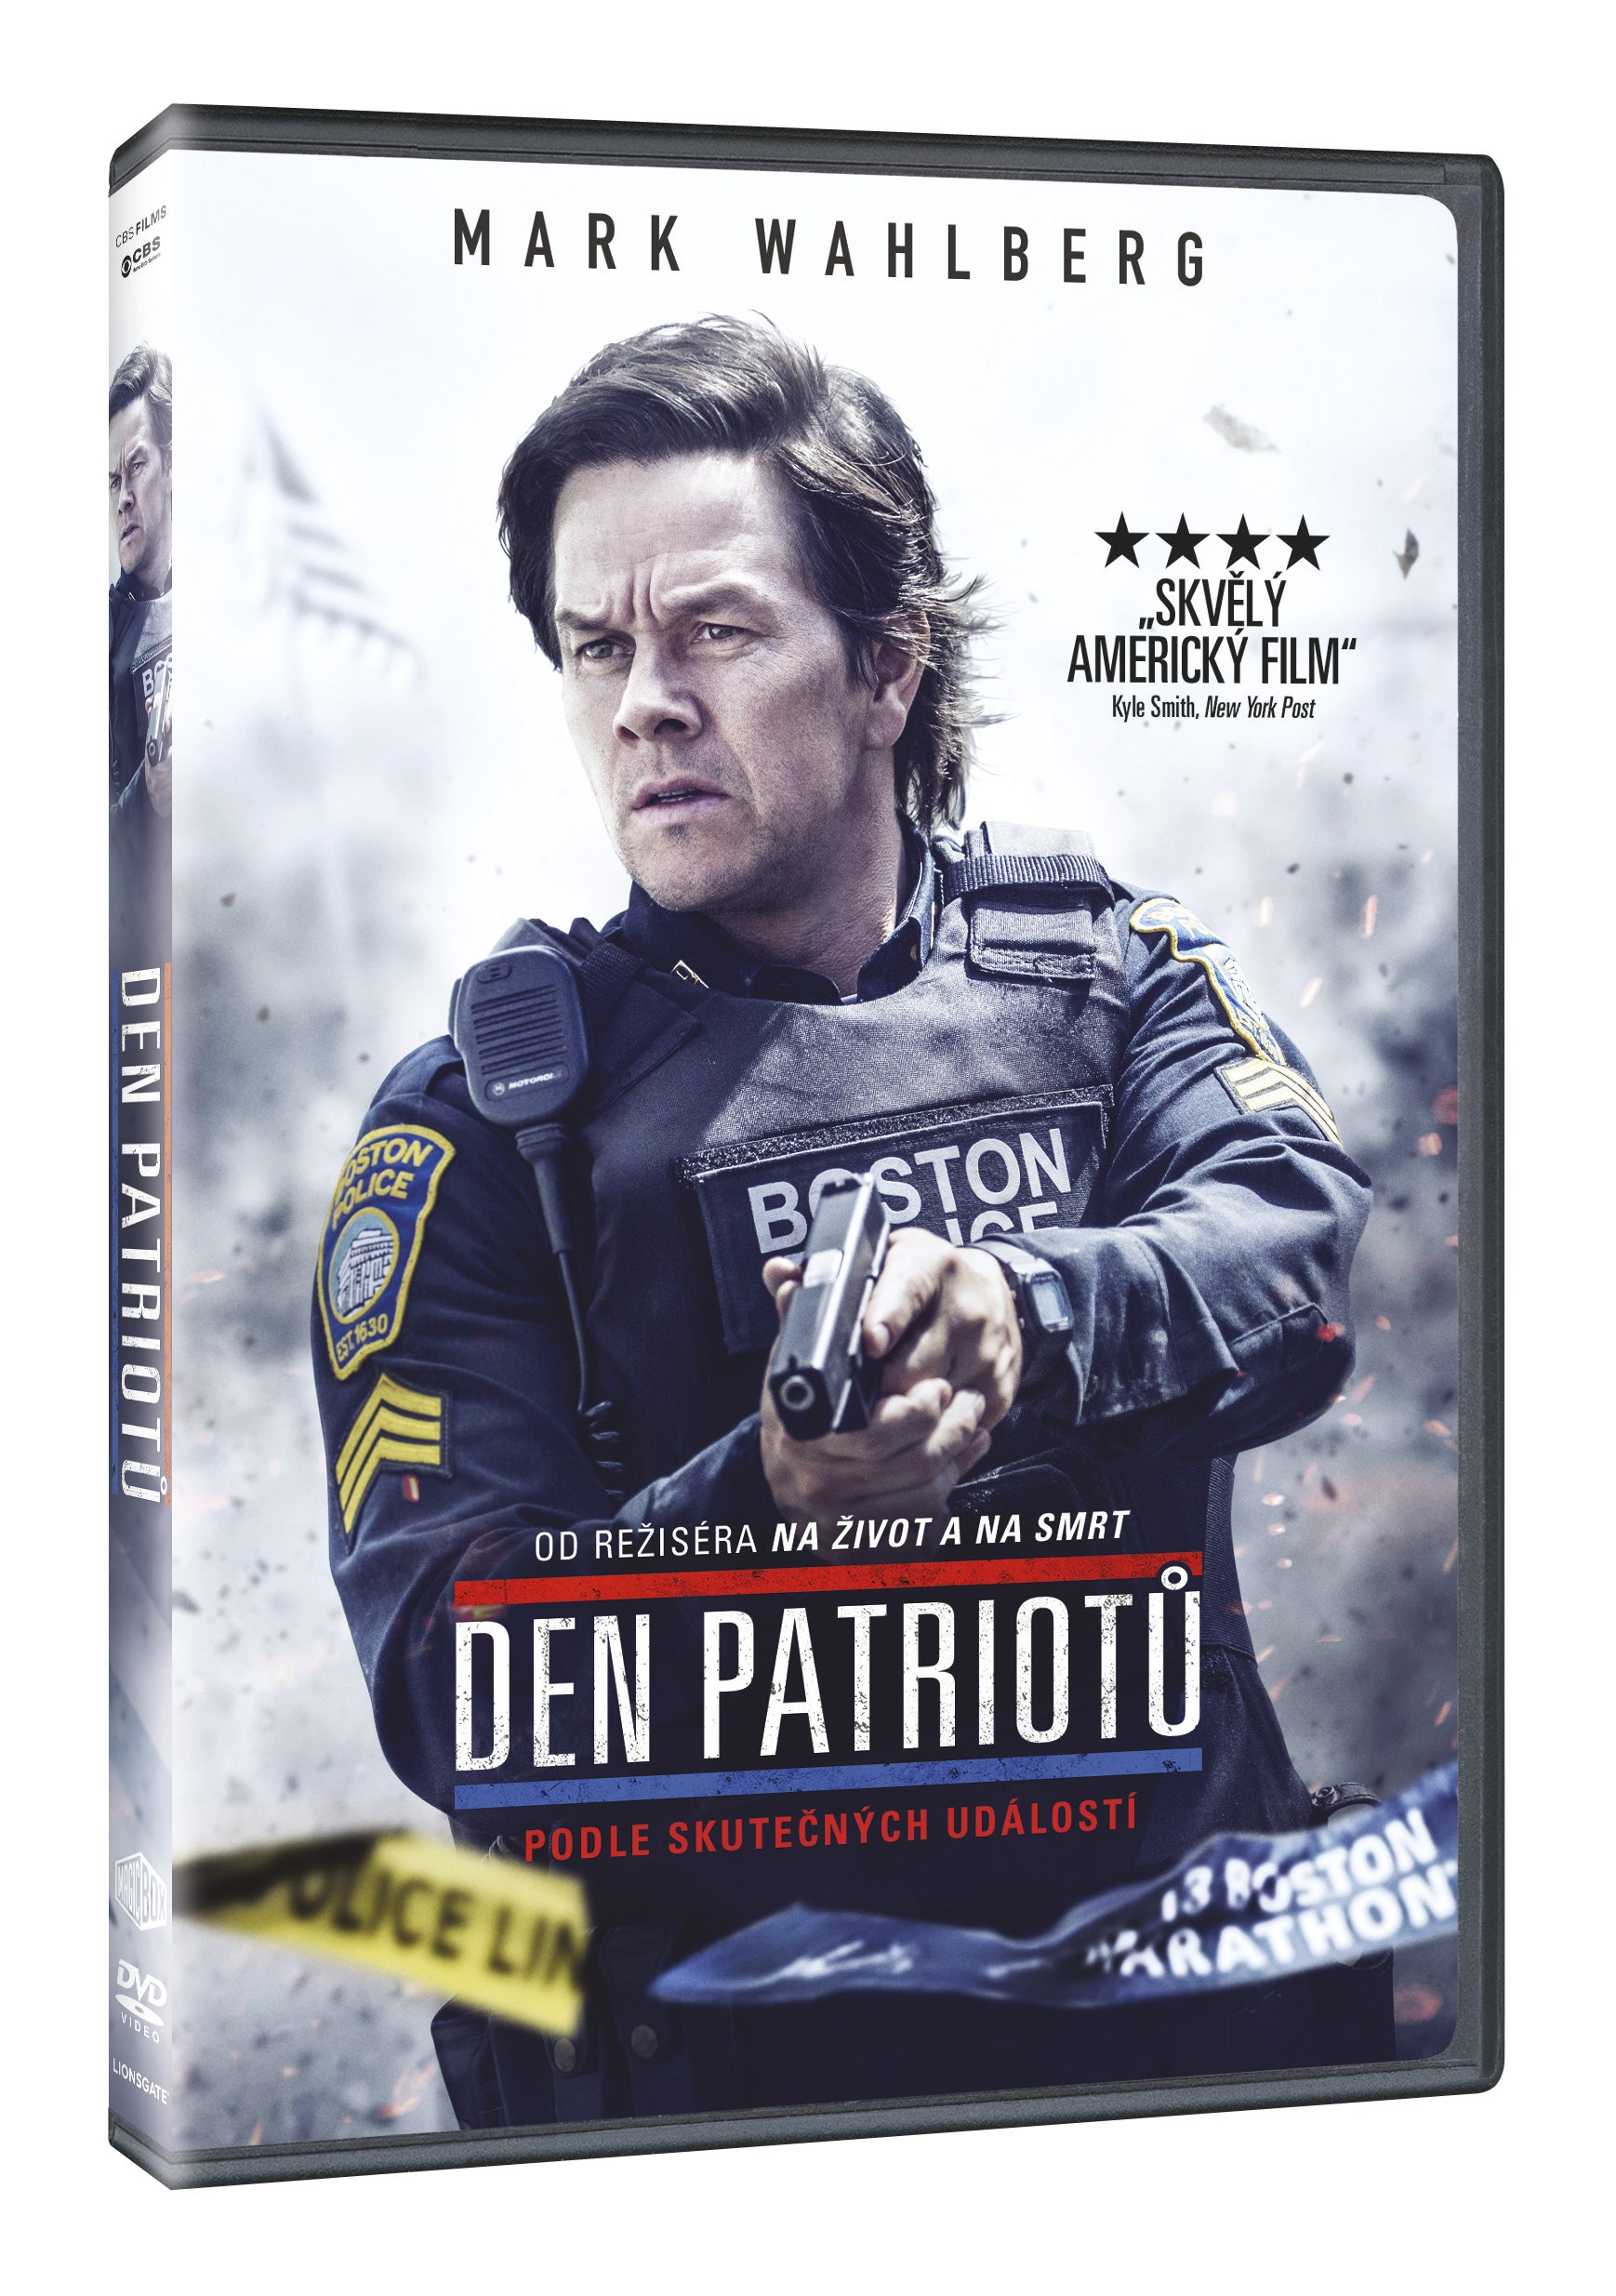 Die Patriot-DVD / Patriots Day